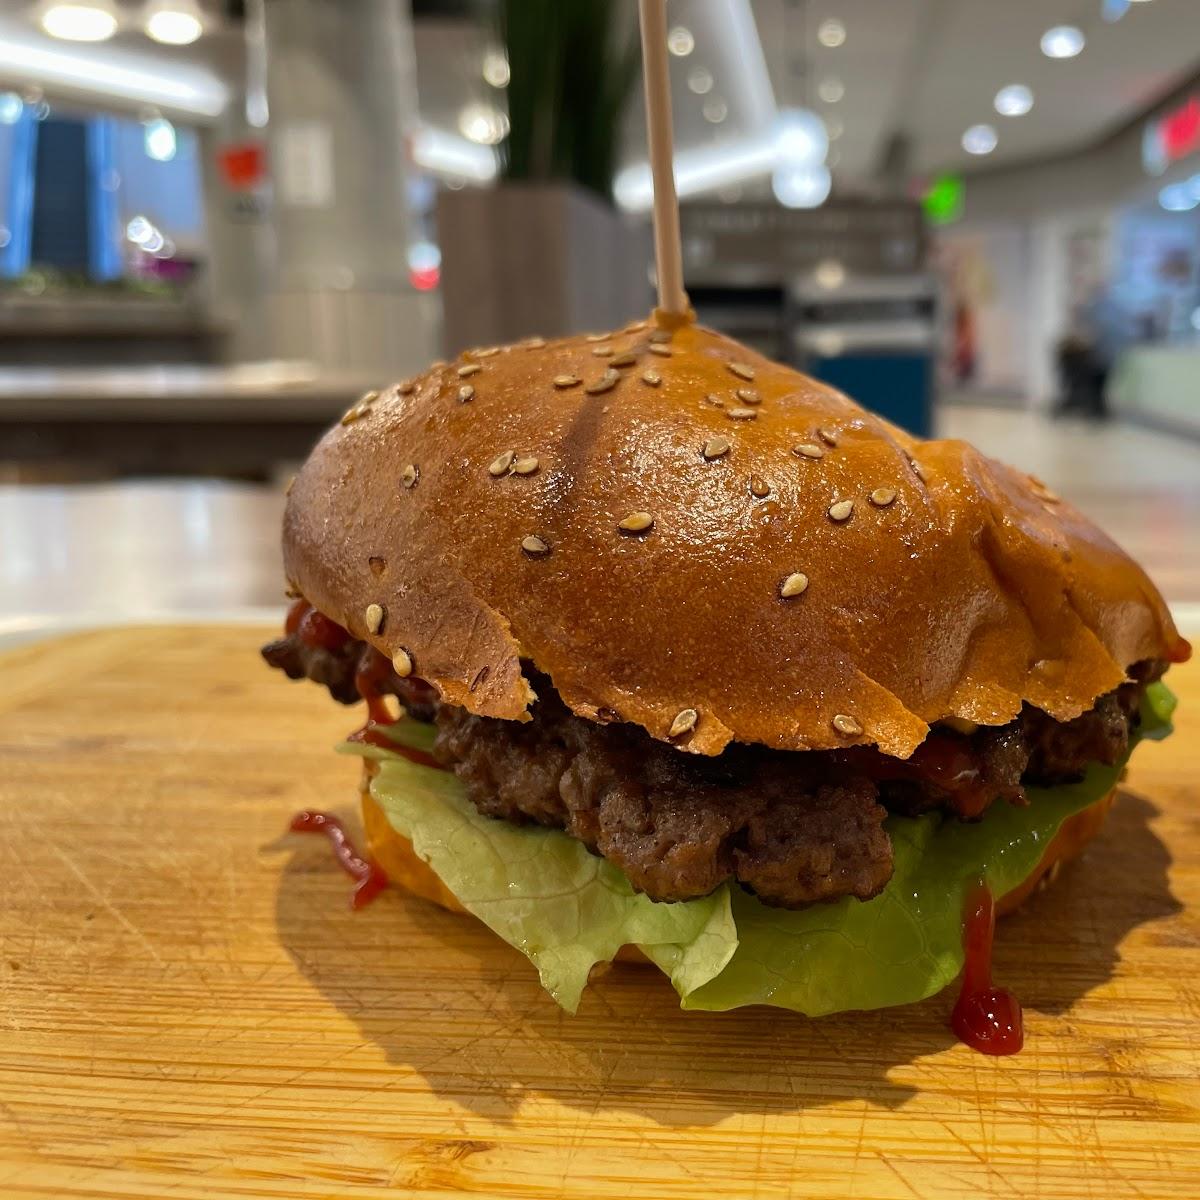 Restaurant "Burger Bro" in Neumünster